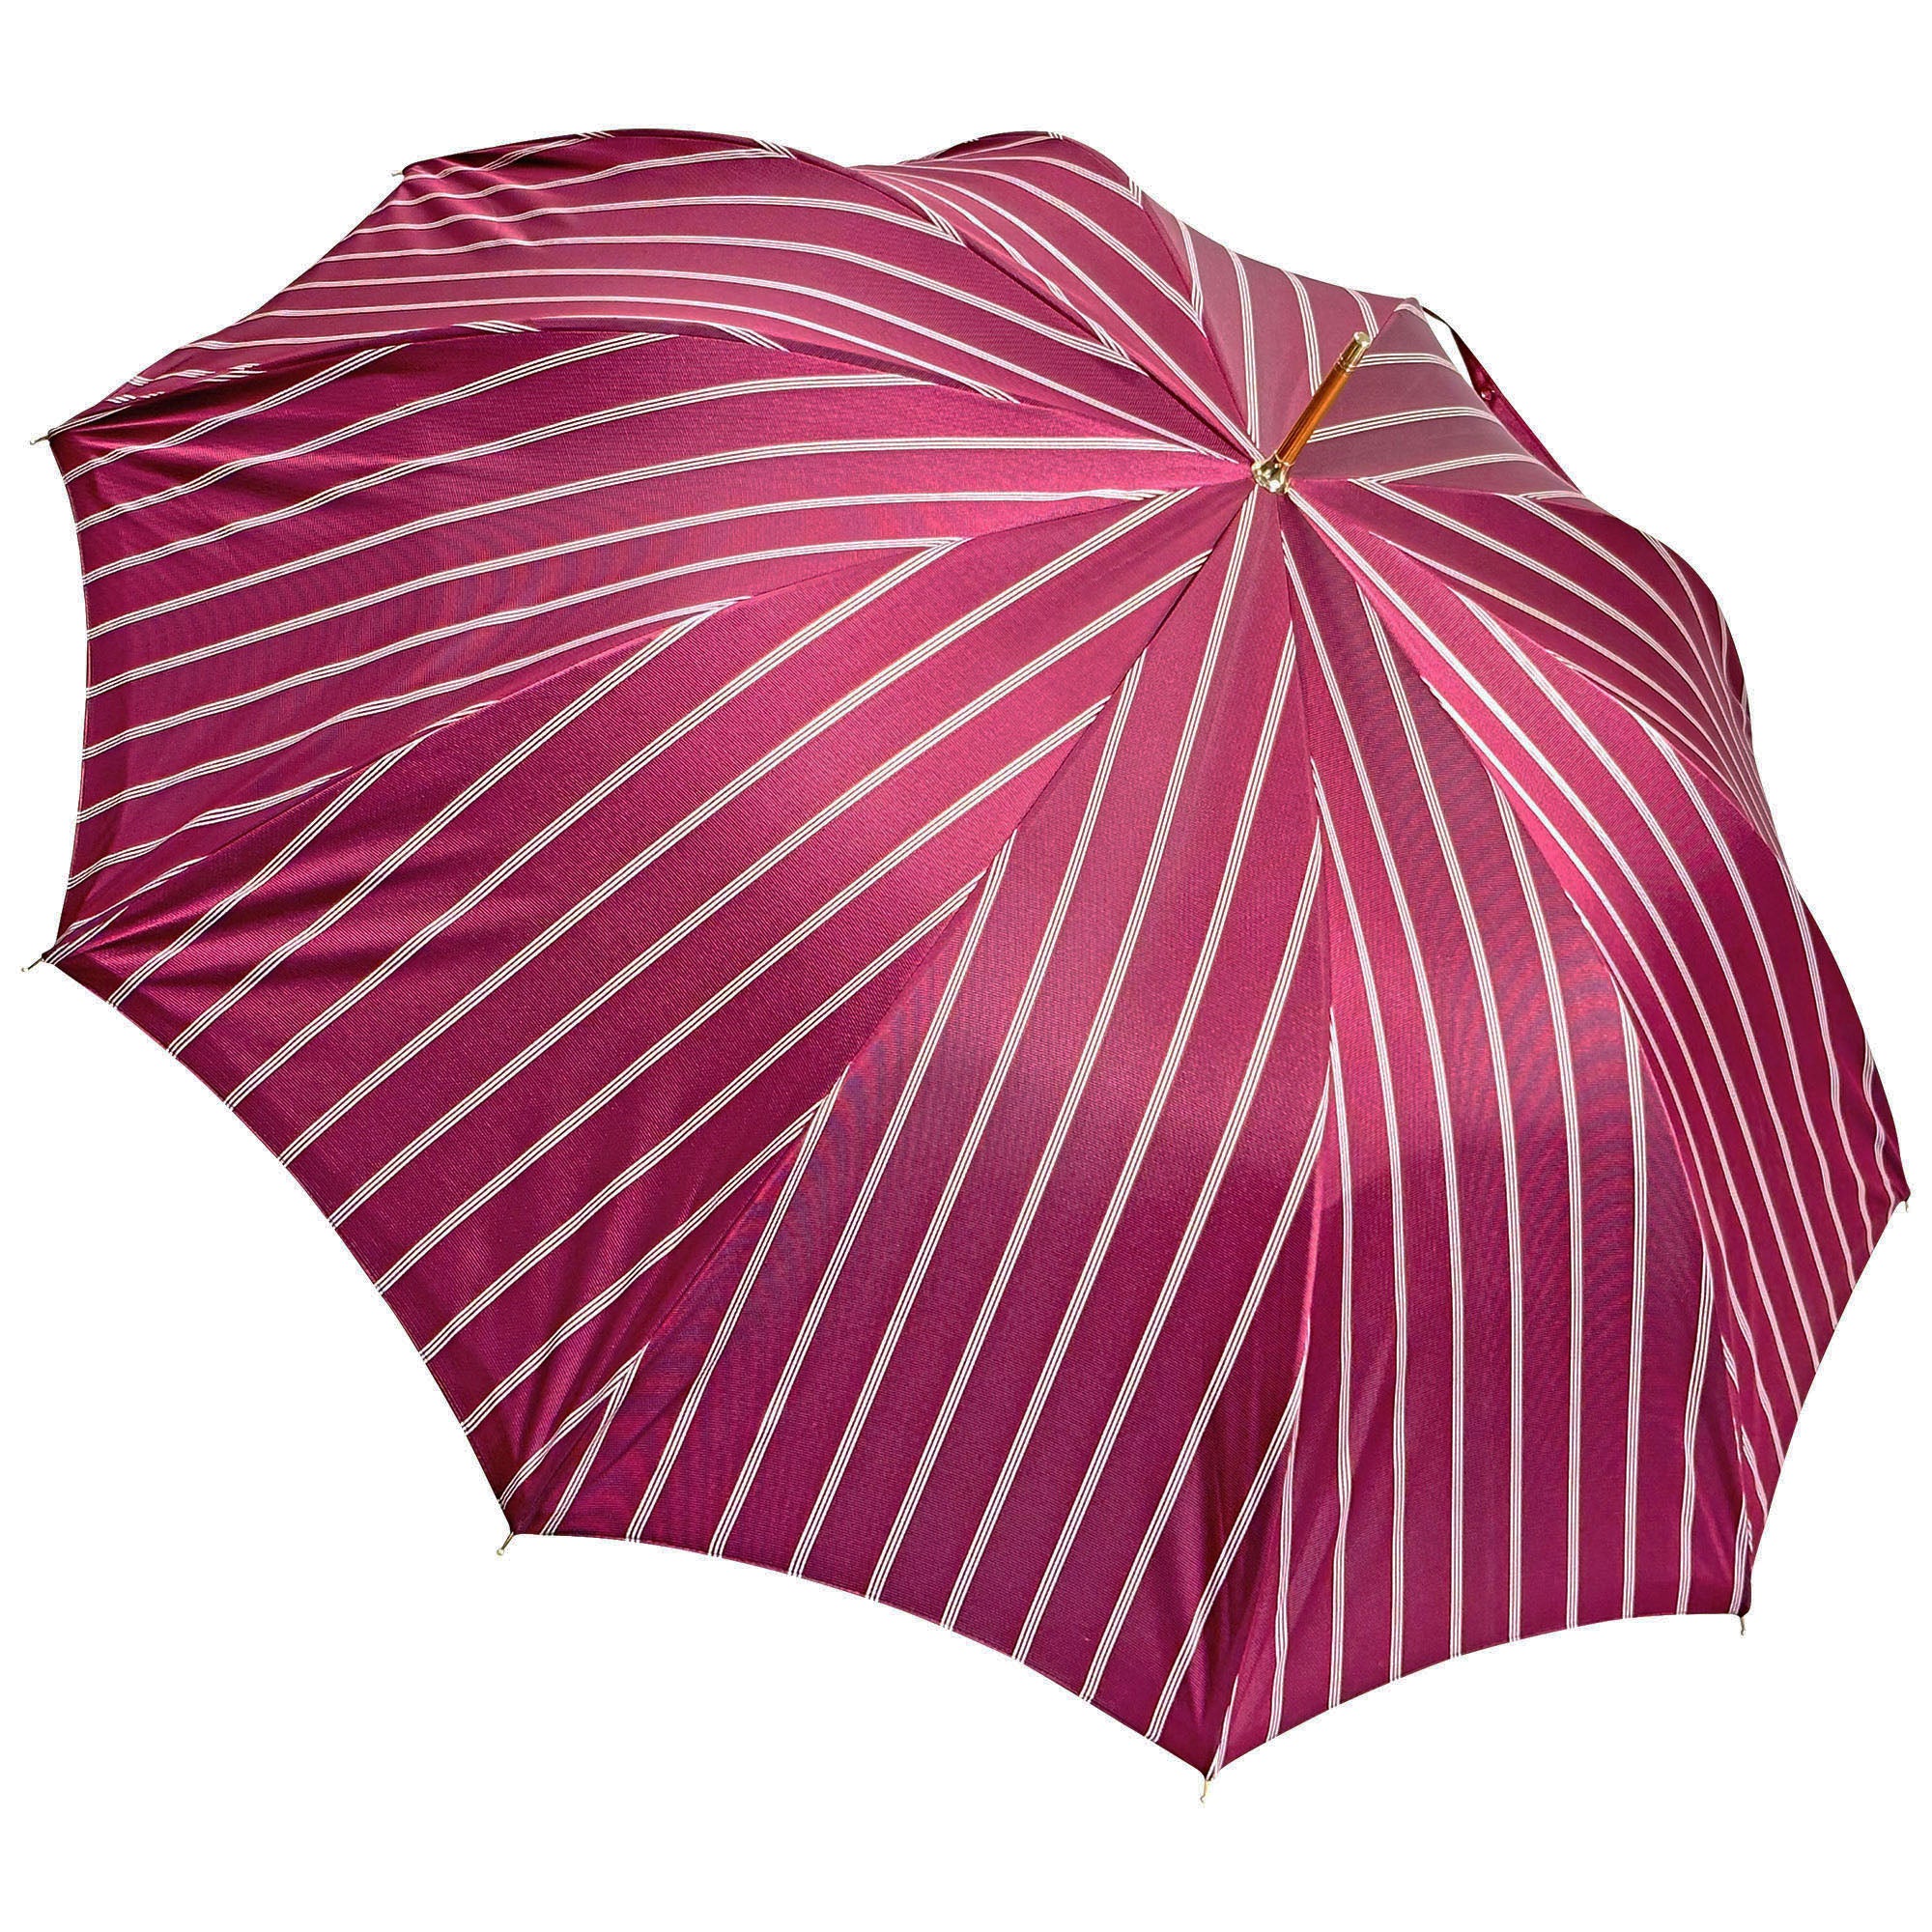 Stylish umbrella - Goldplated 24K Dobermann handle